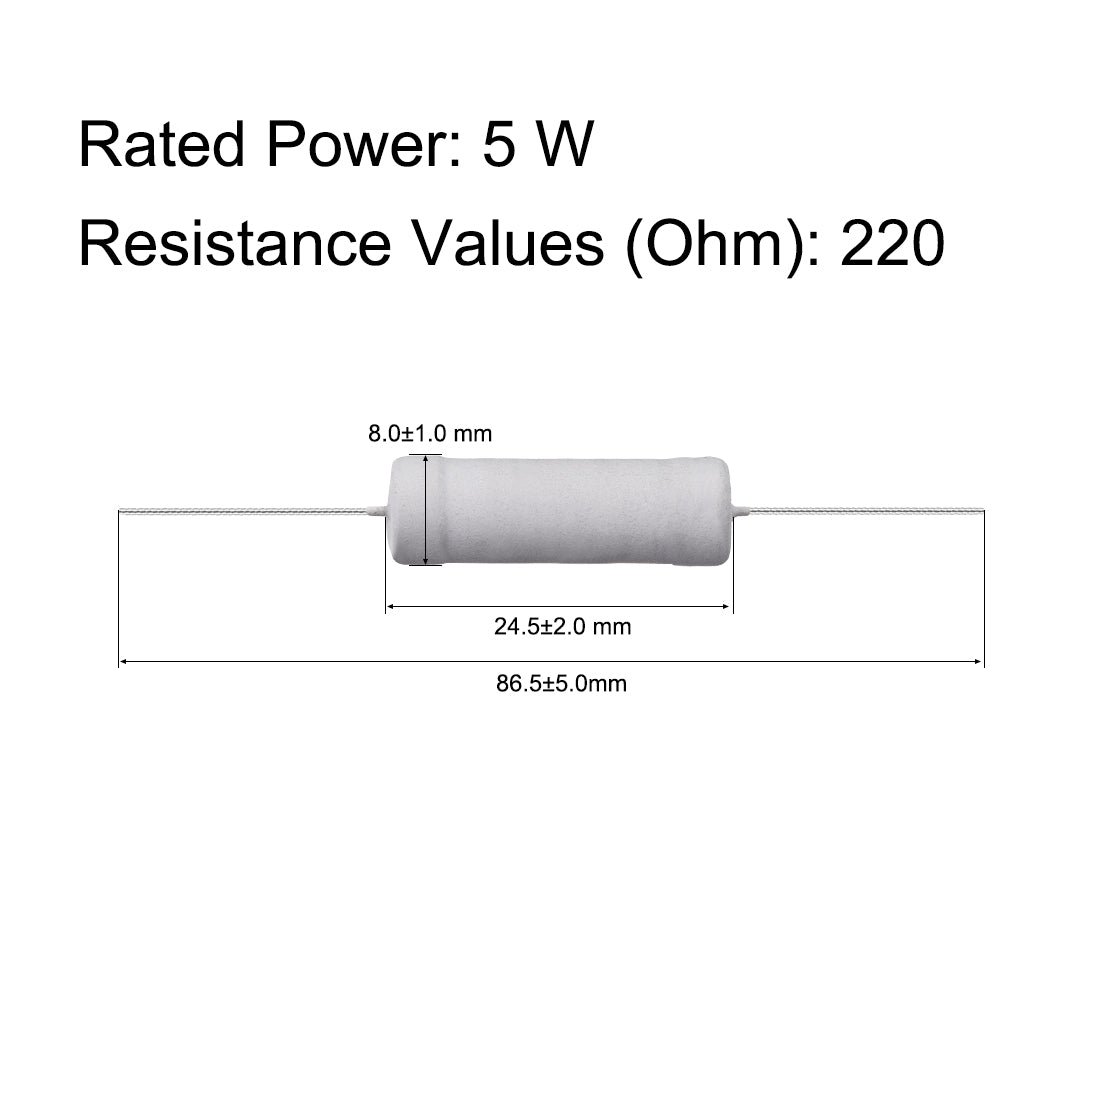 uxcell Uxcell 30 Pcs 5W 5 Watt Metal Oxide Film Resistor Axile Lead 220 Ohm ±5% Tolerance